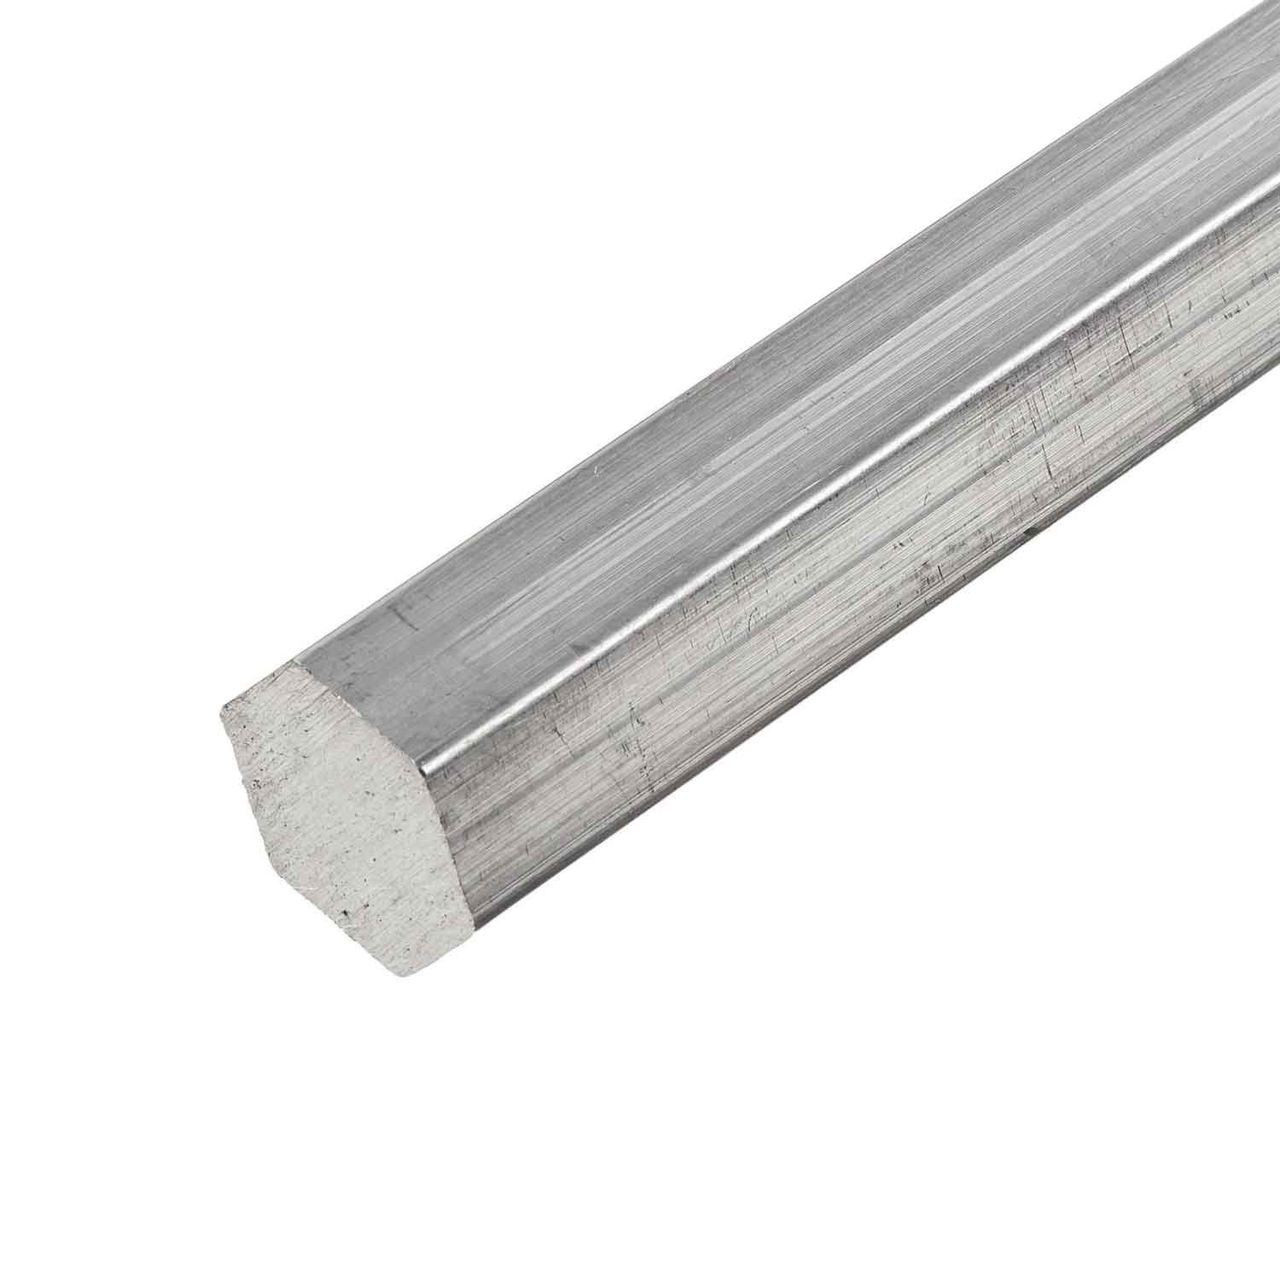 0.188 (3/16 inch) x 48 inches (3 Pack), 2024-T4 Aluminum Hexagon Bar